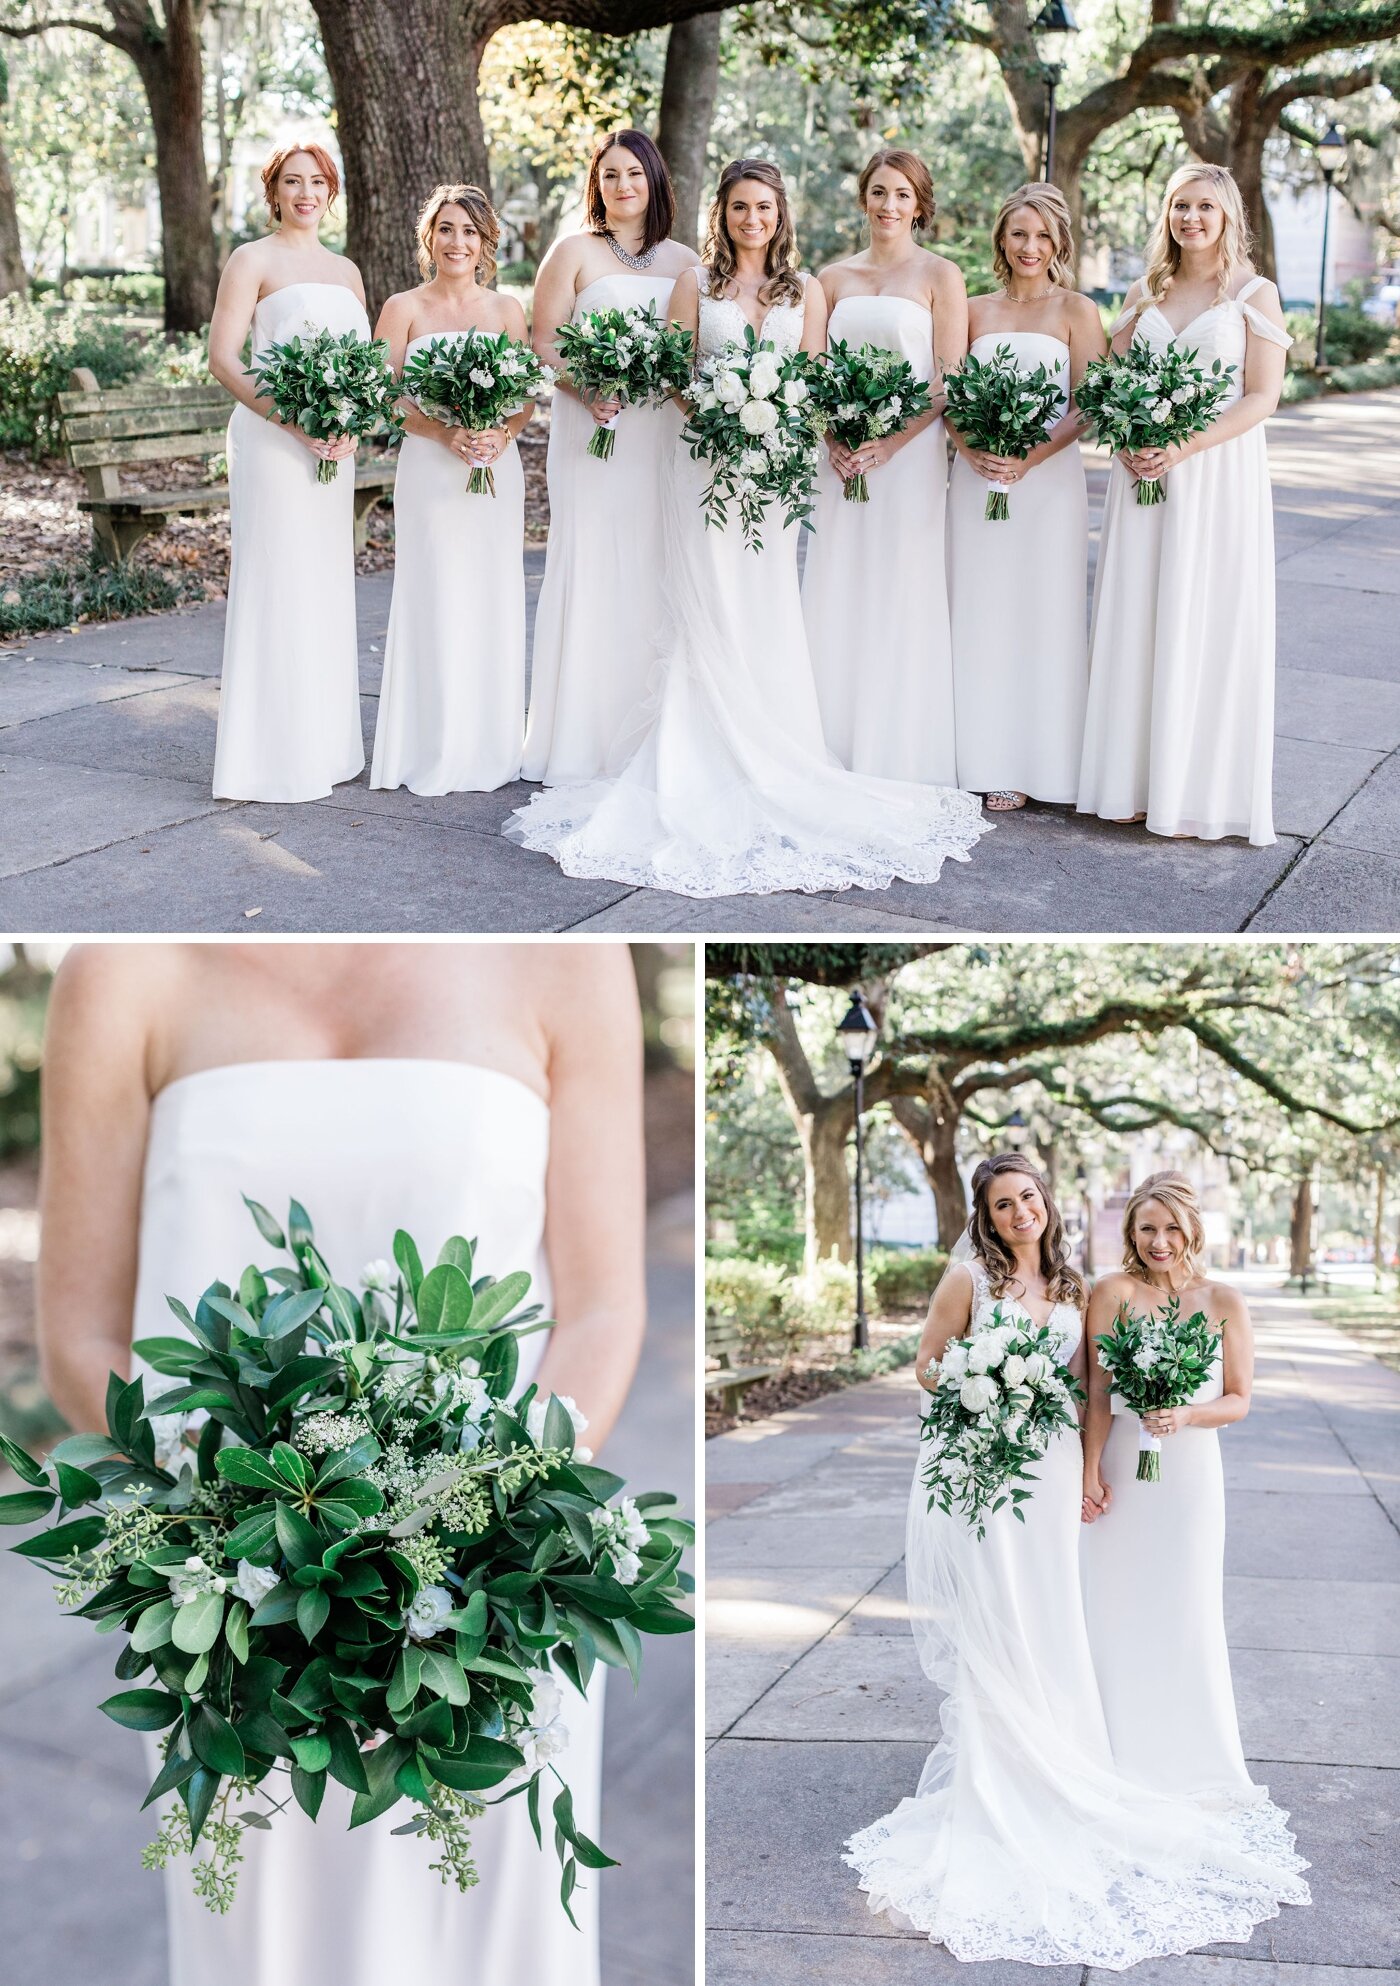 White bridesmaids dresses